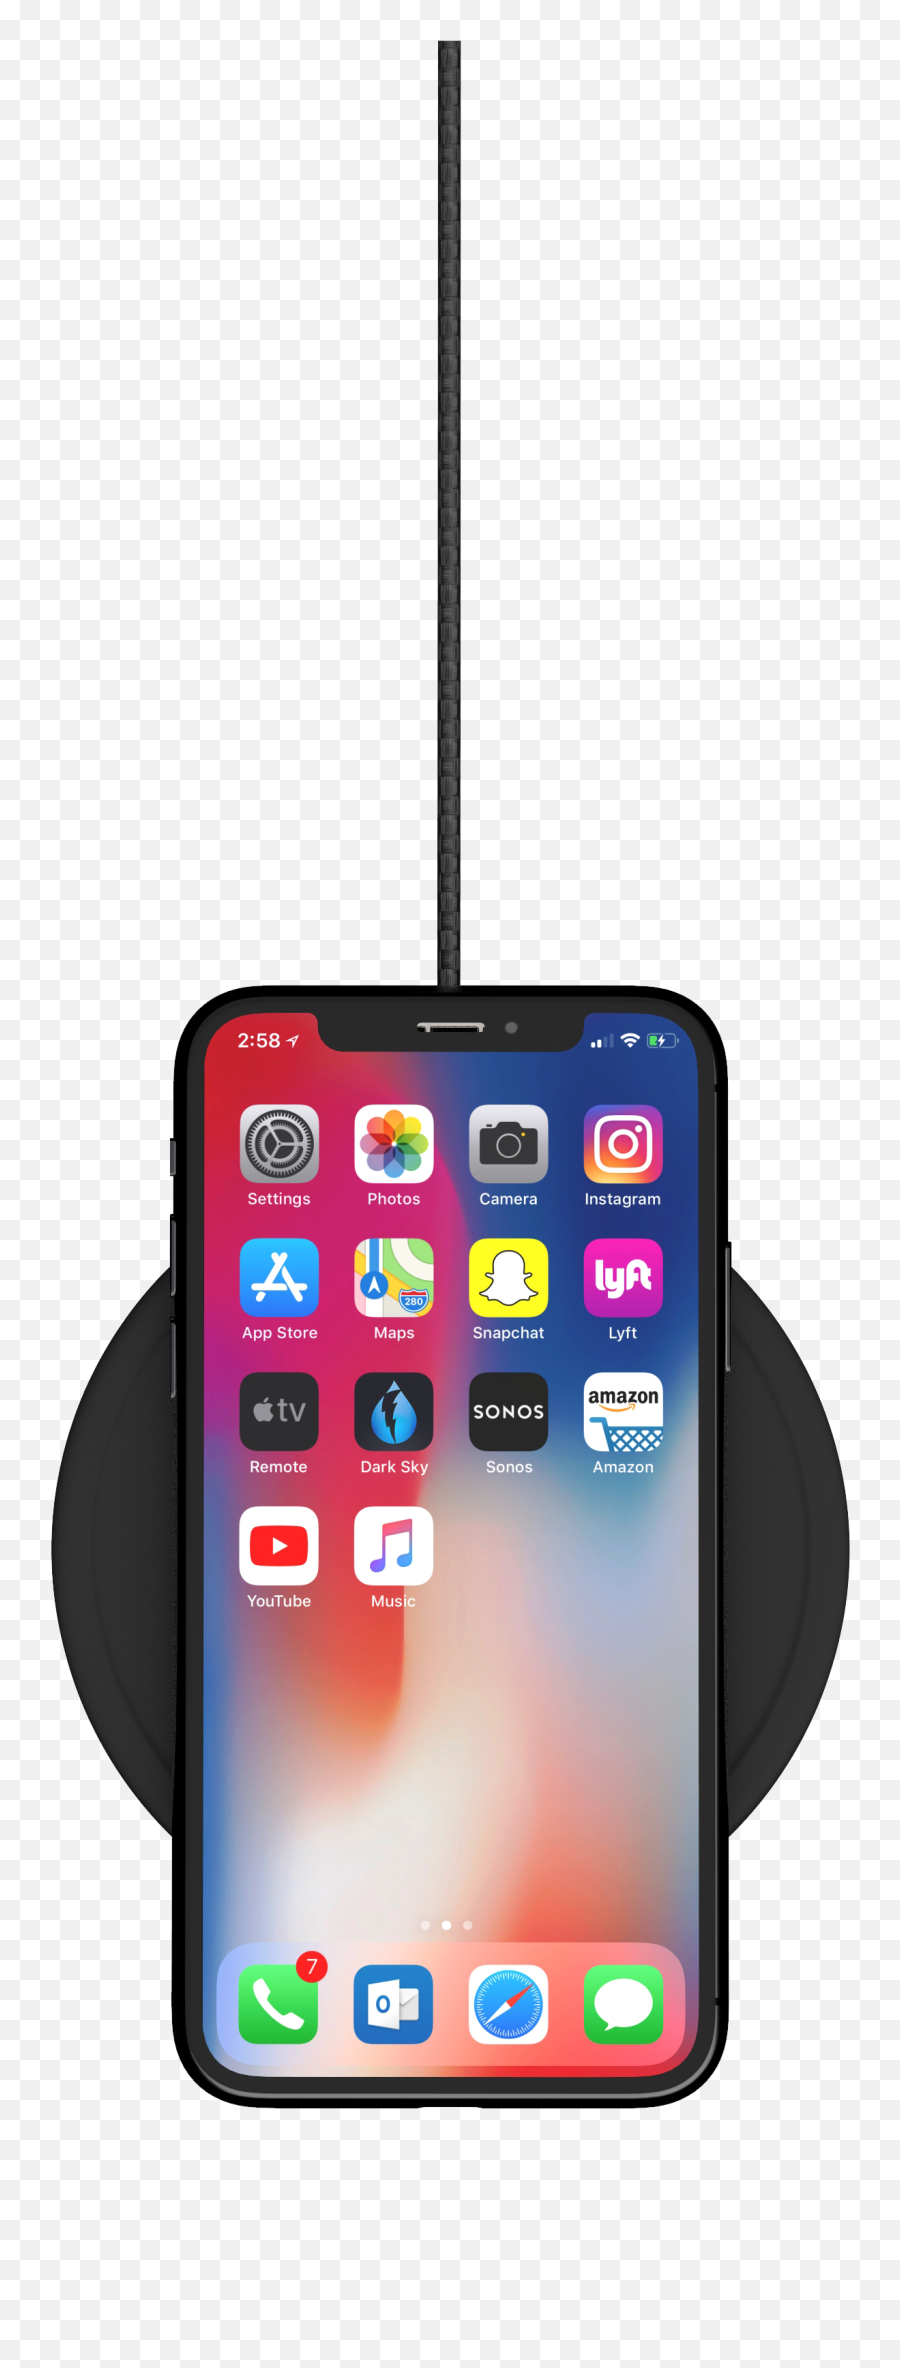 Nightpad Wireless Charger Elevationlab Emoji,Glowing Apple Logo Iphone 7